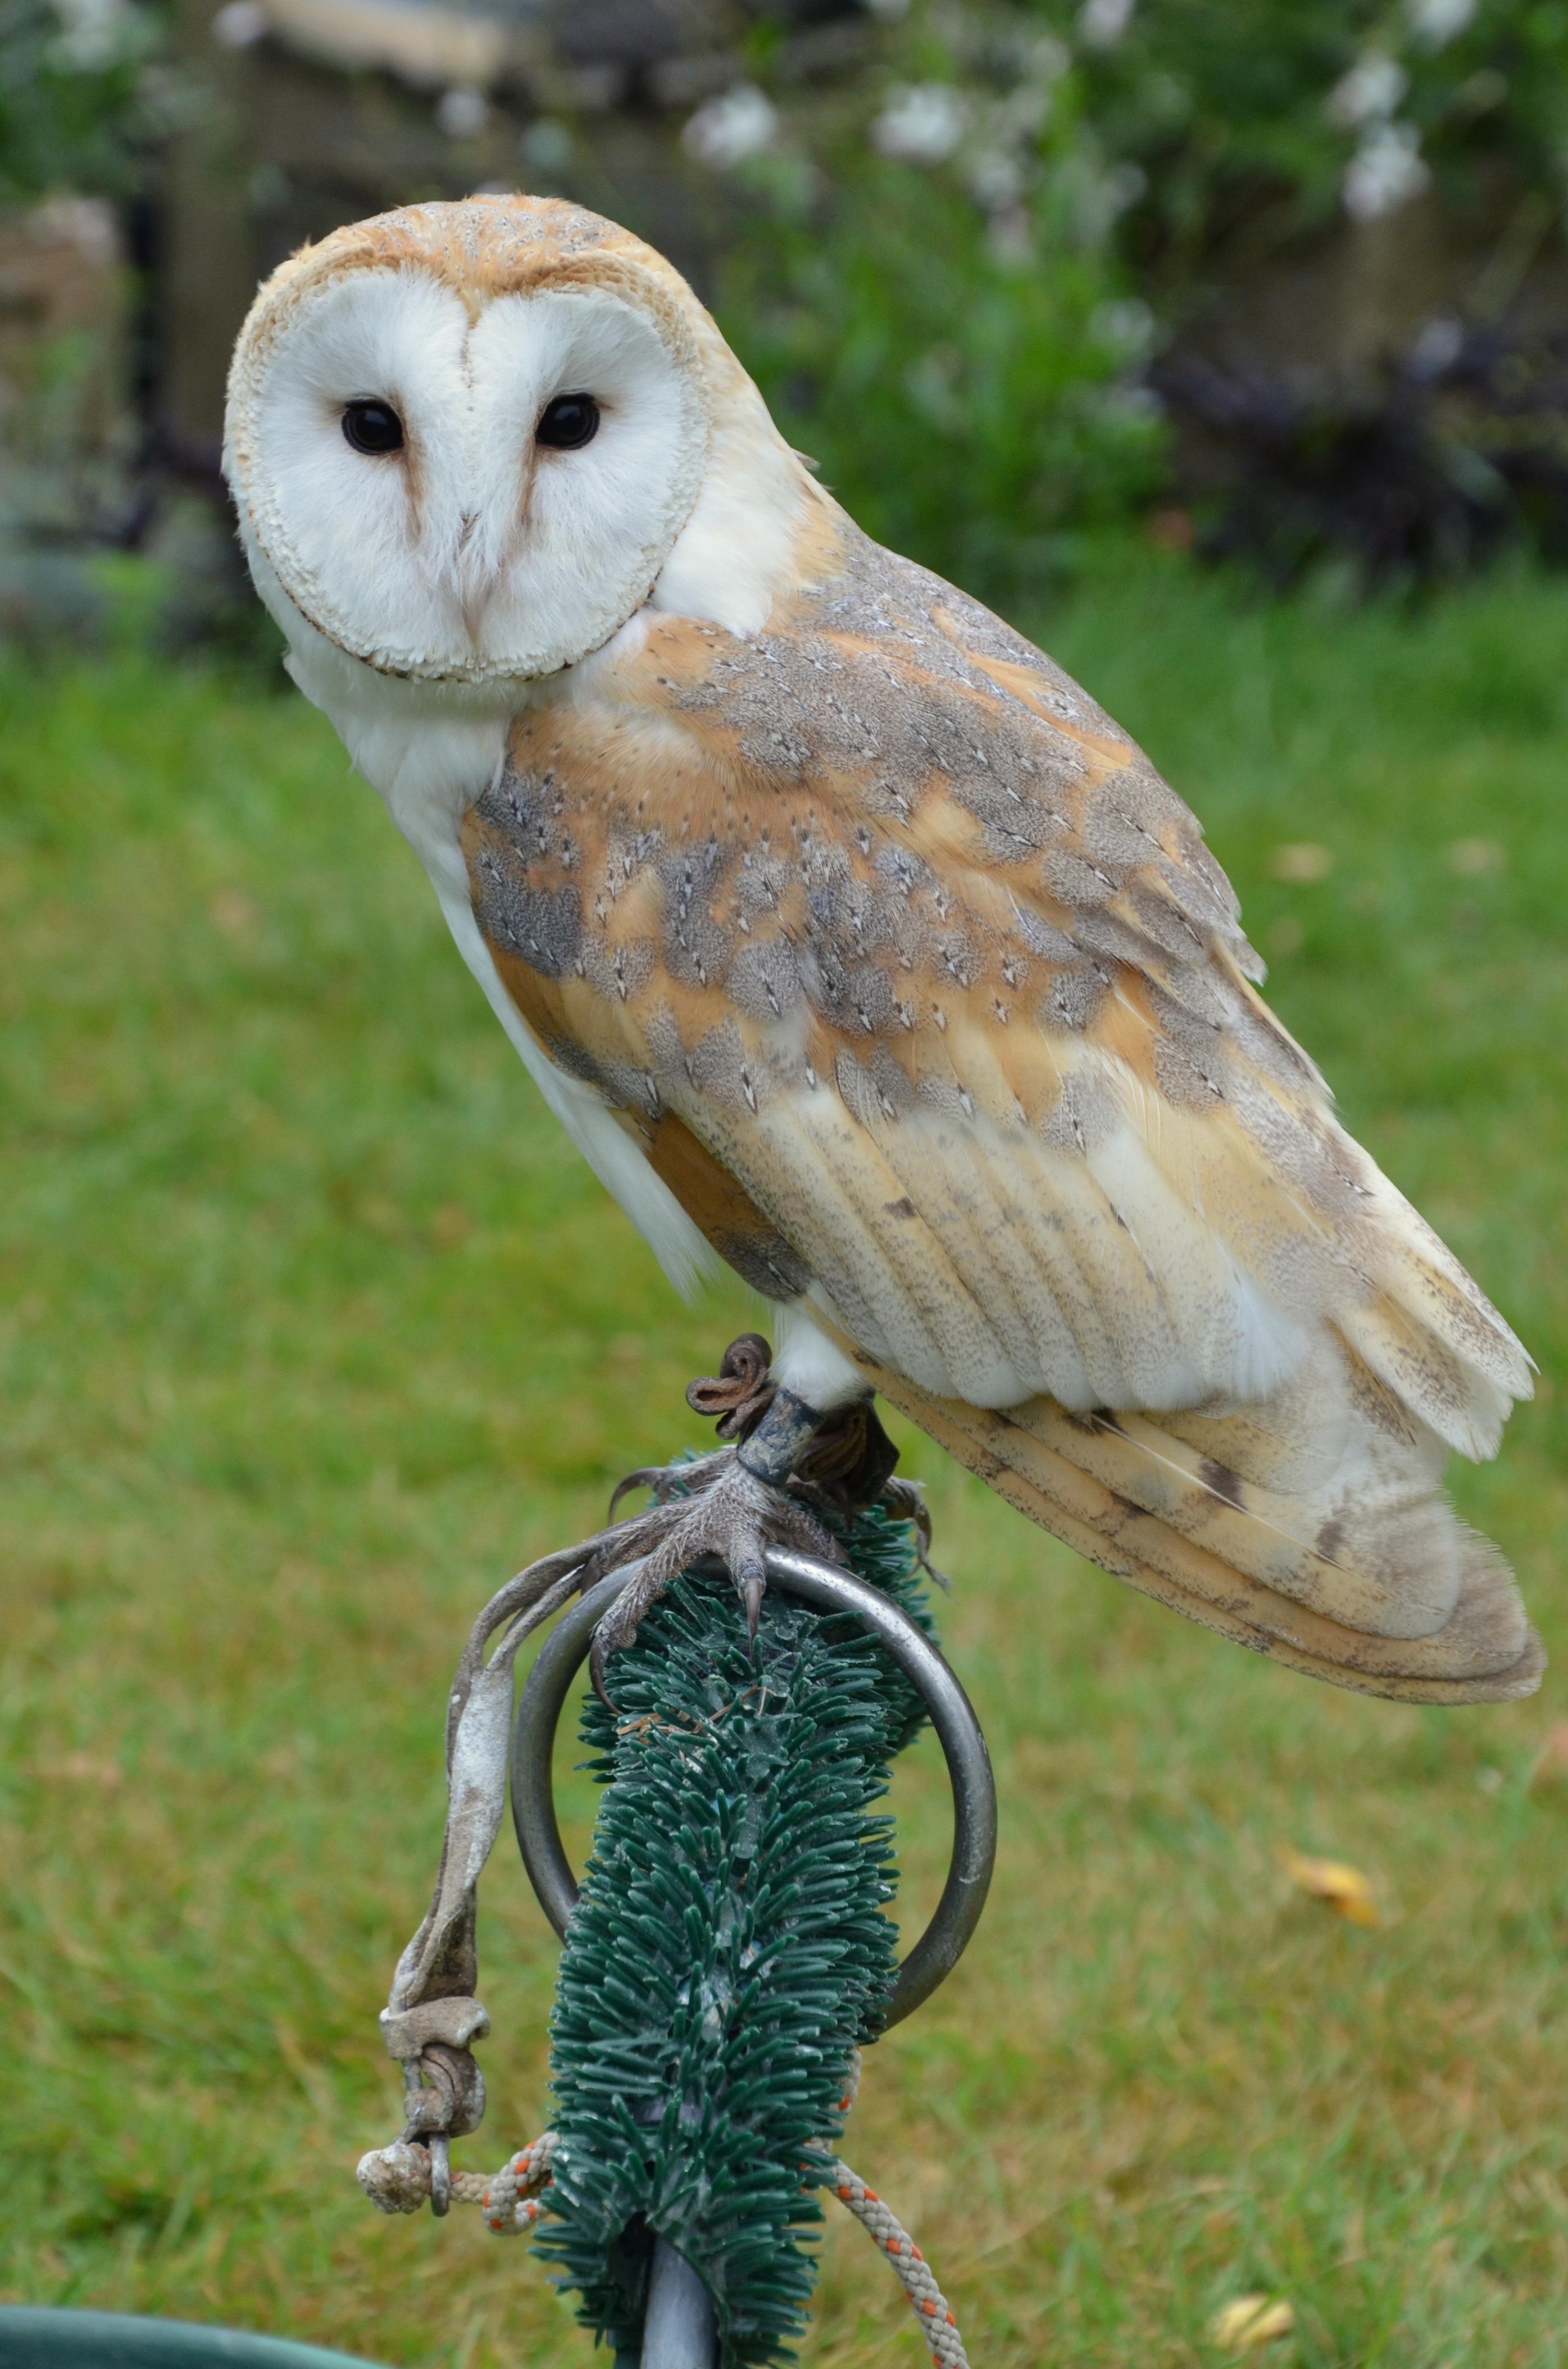 Barn Owl, Owl, Bird, Falconry, bird, animal themes